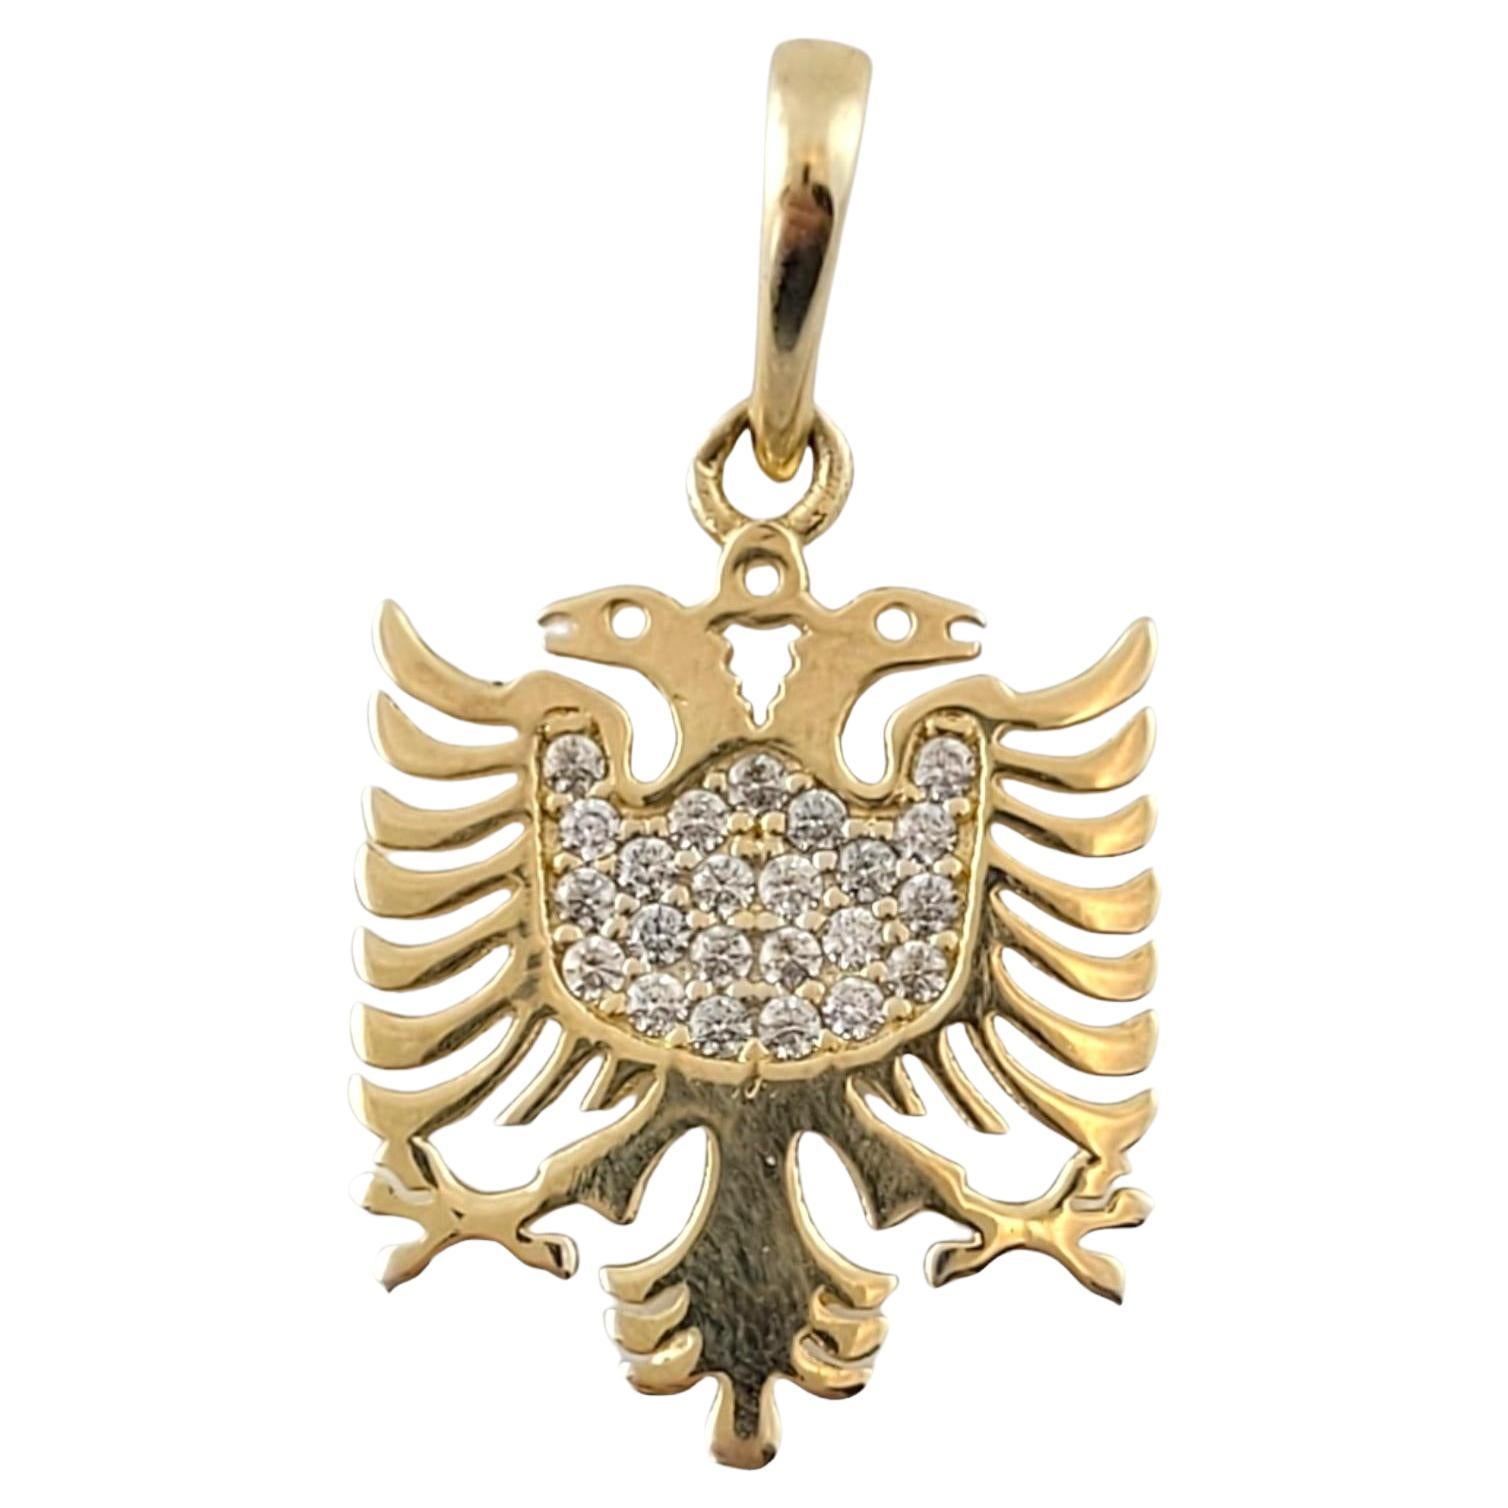 14K Yellow Gold Albanian Eagle Pendant #17344